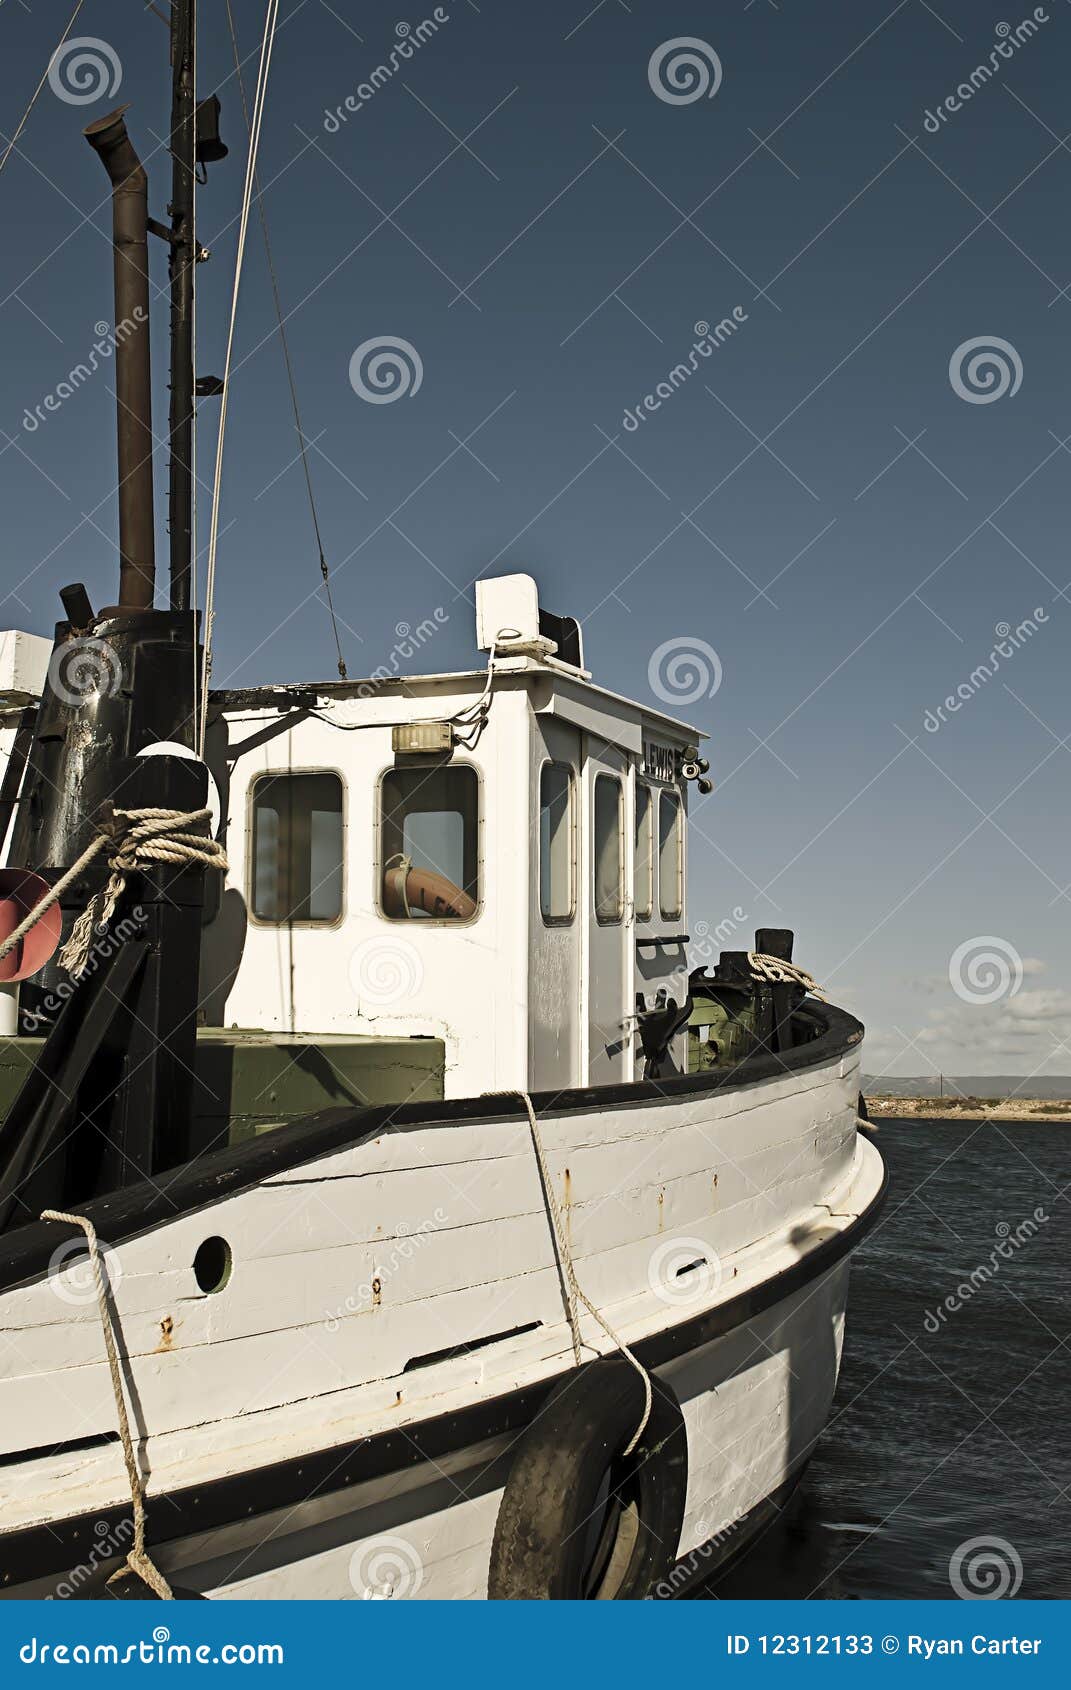 1,849 Old Wooden Fishing Trawler Stock Photos - Free & Royalty